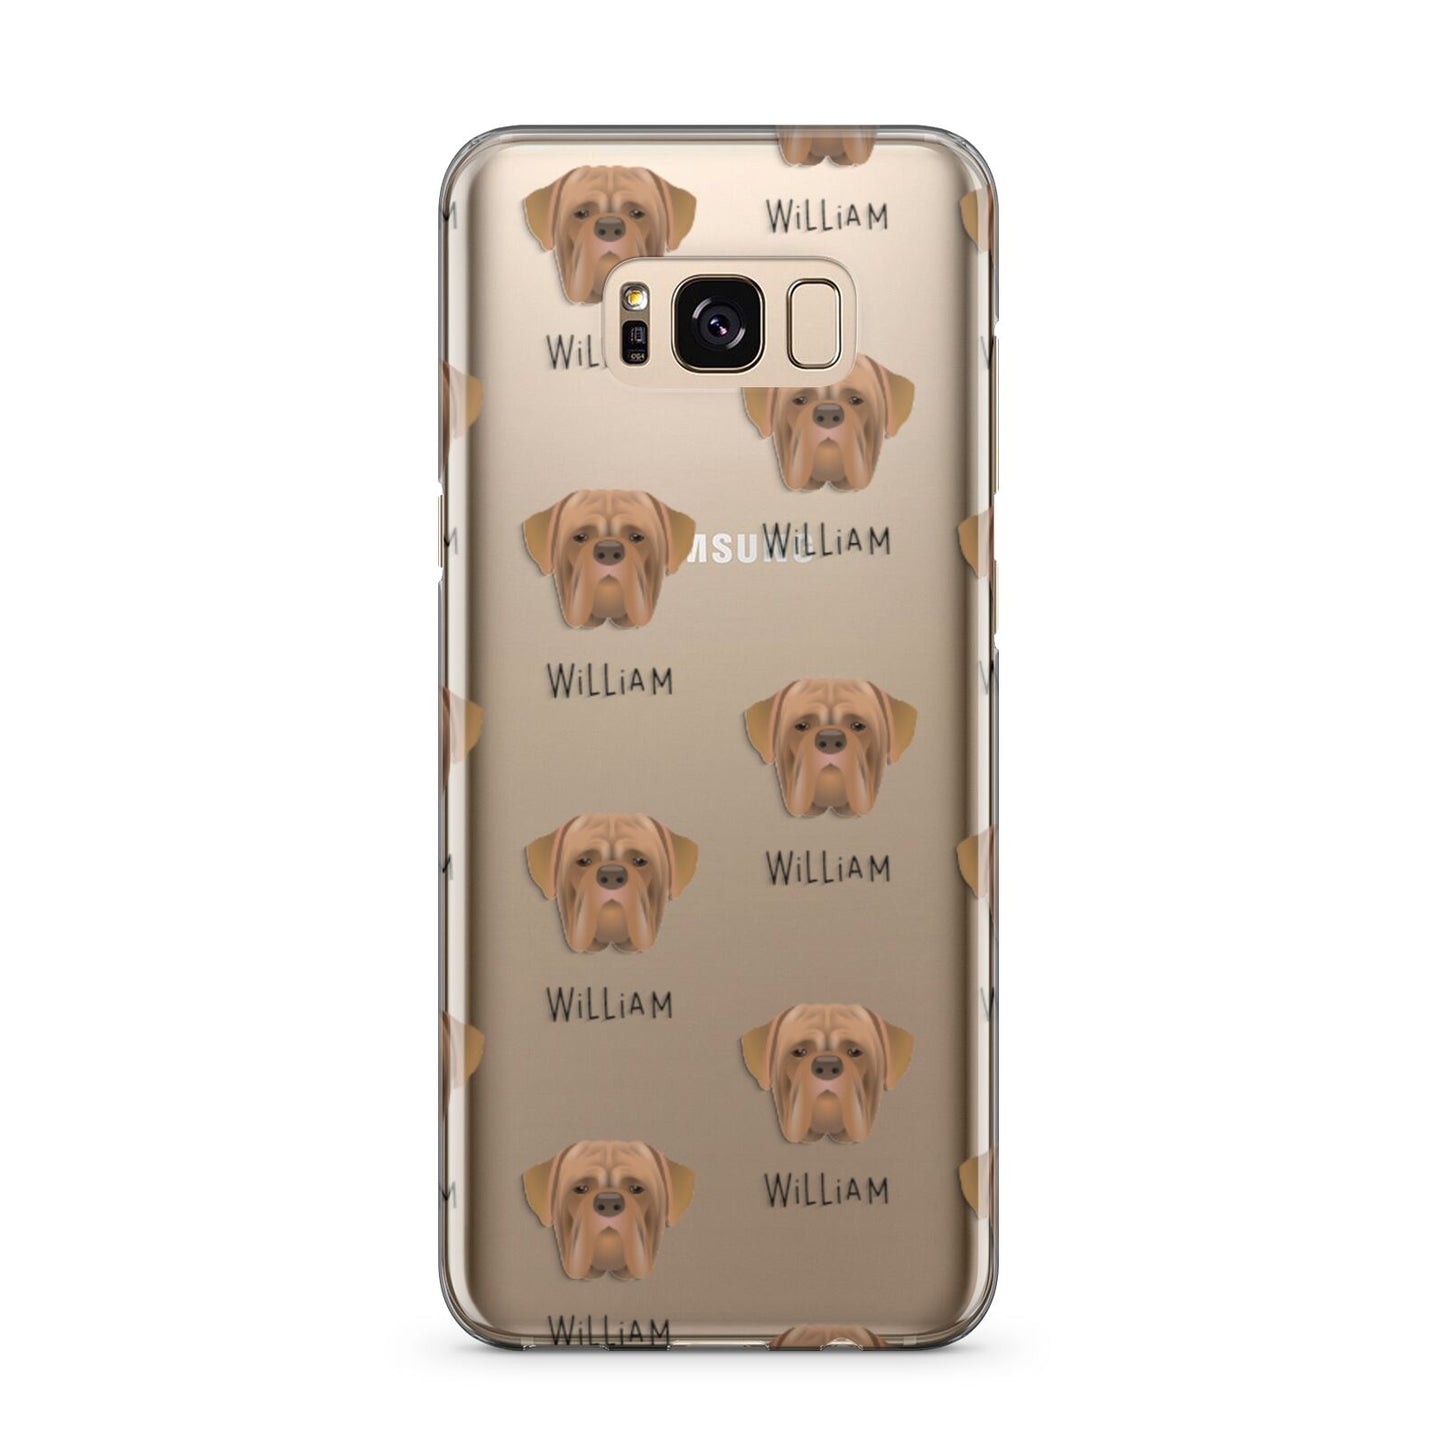 Dogue de Bordeaux Icon with Name Samsung Galaxy S8 Plus Case